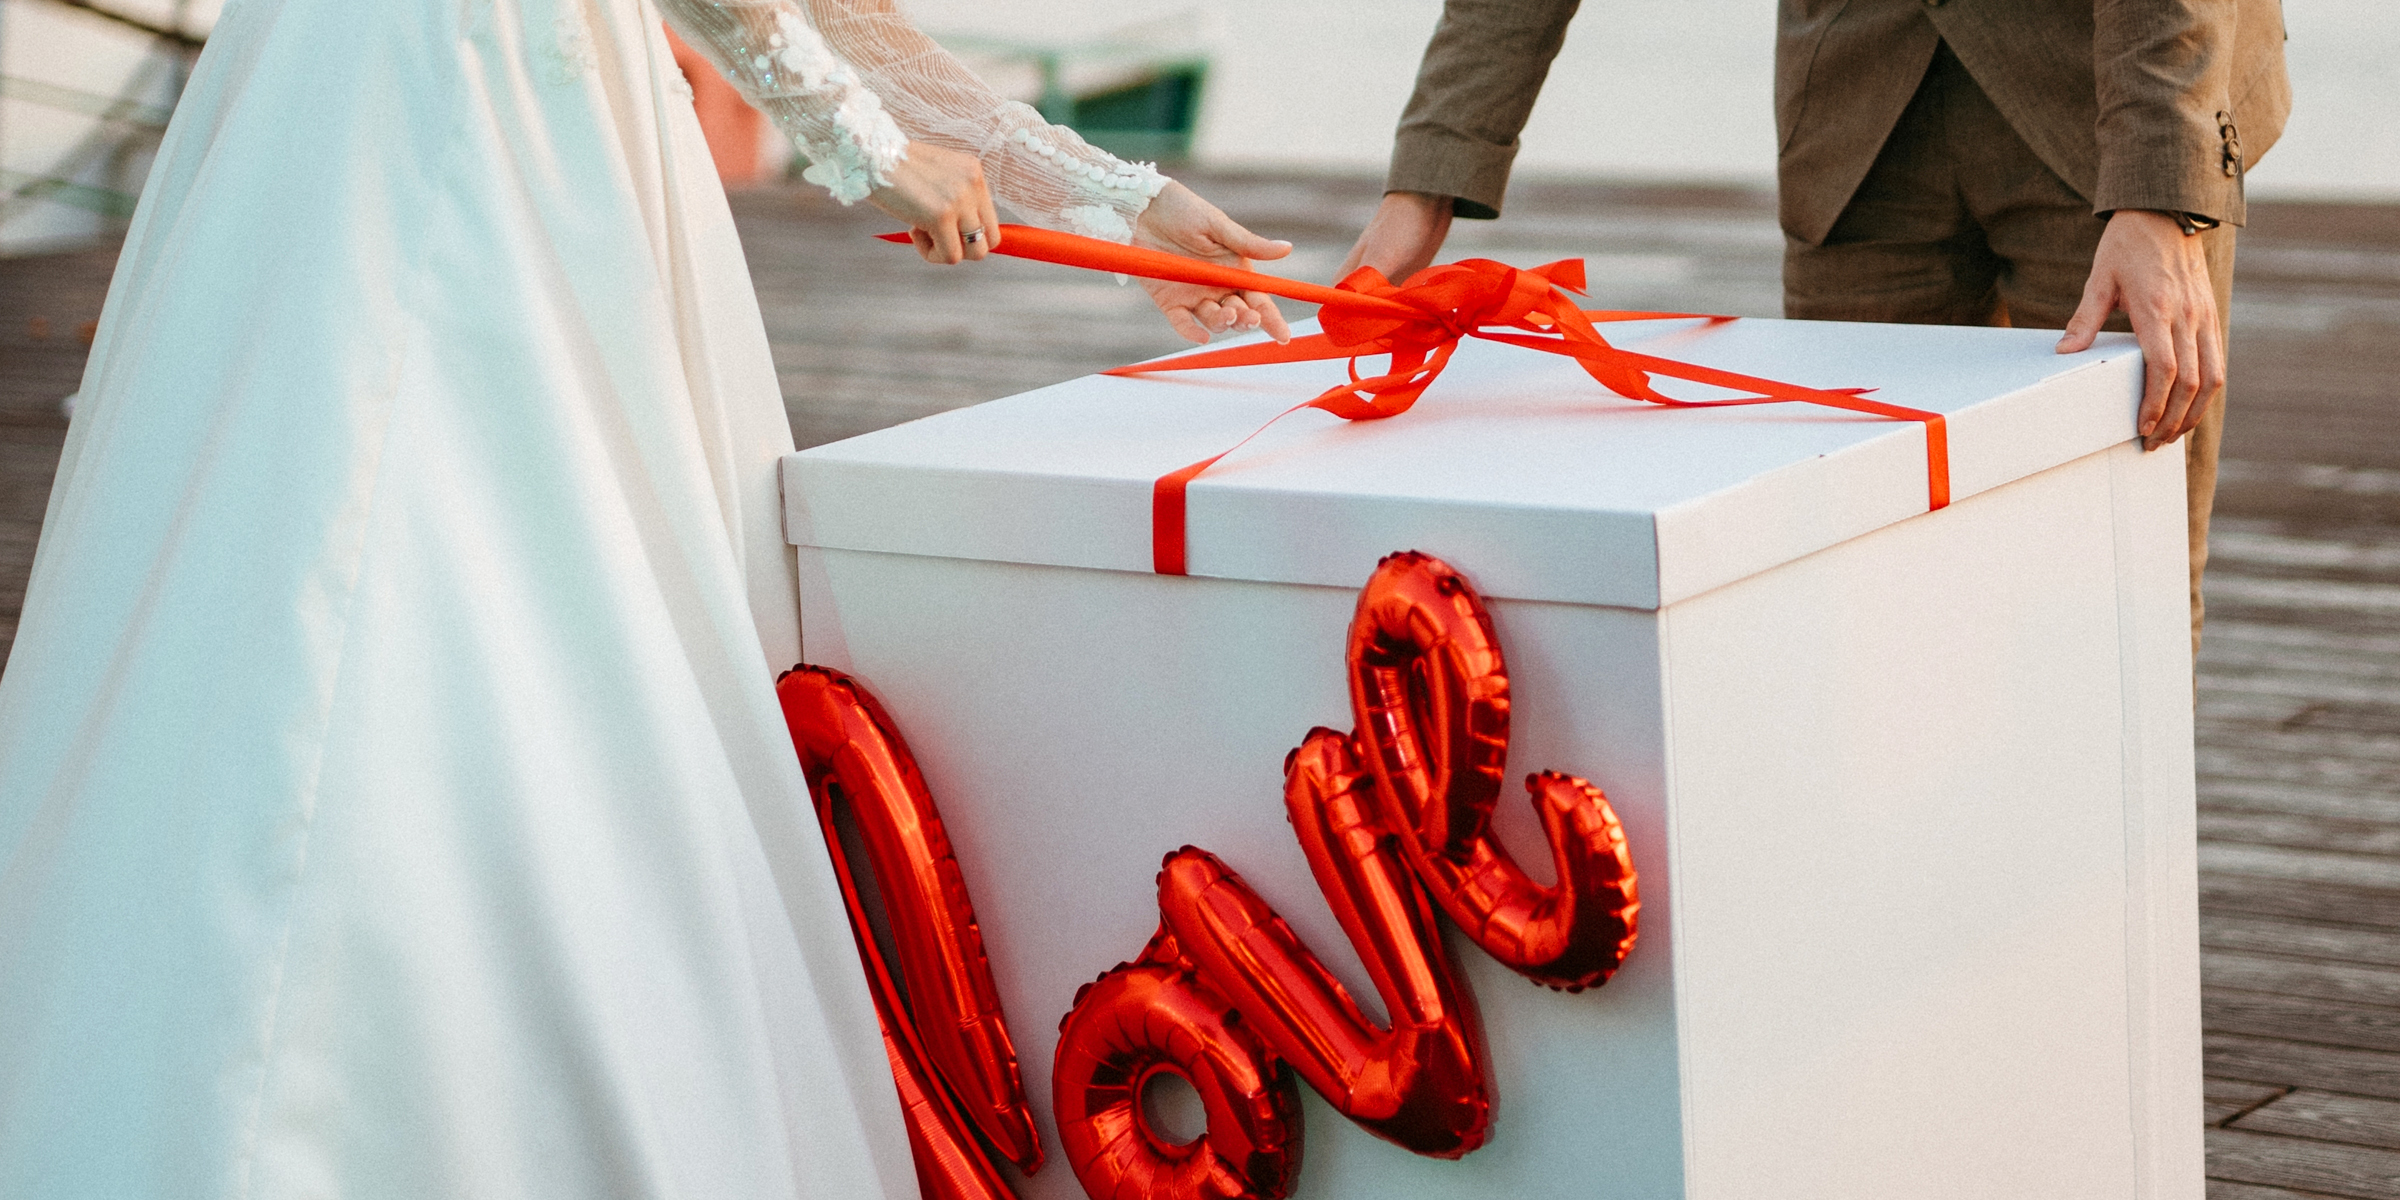 Wedding gift | Source: Shutterstock